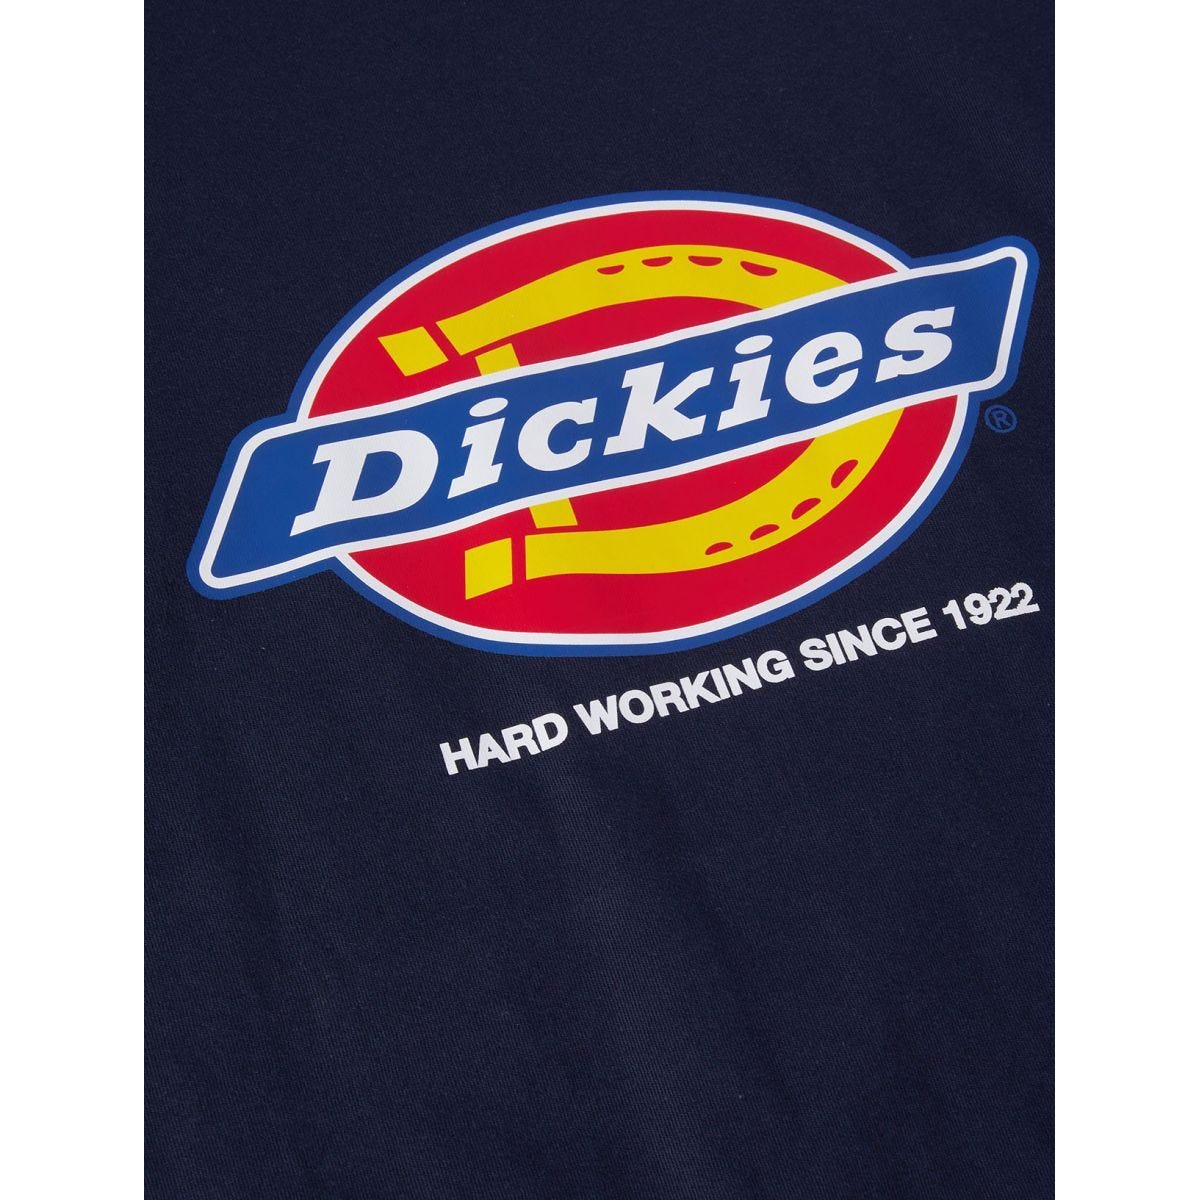 T-shirt de travail Denison bleu marine - Dickies - Taille 2XL 4